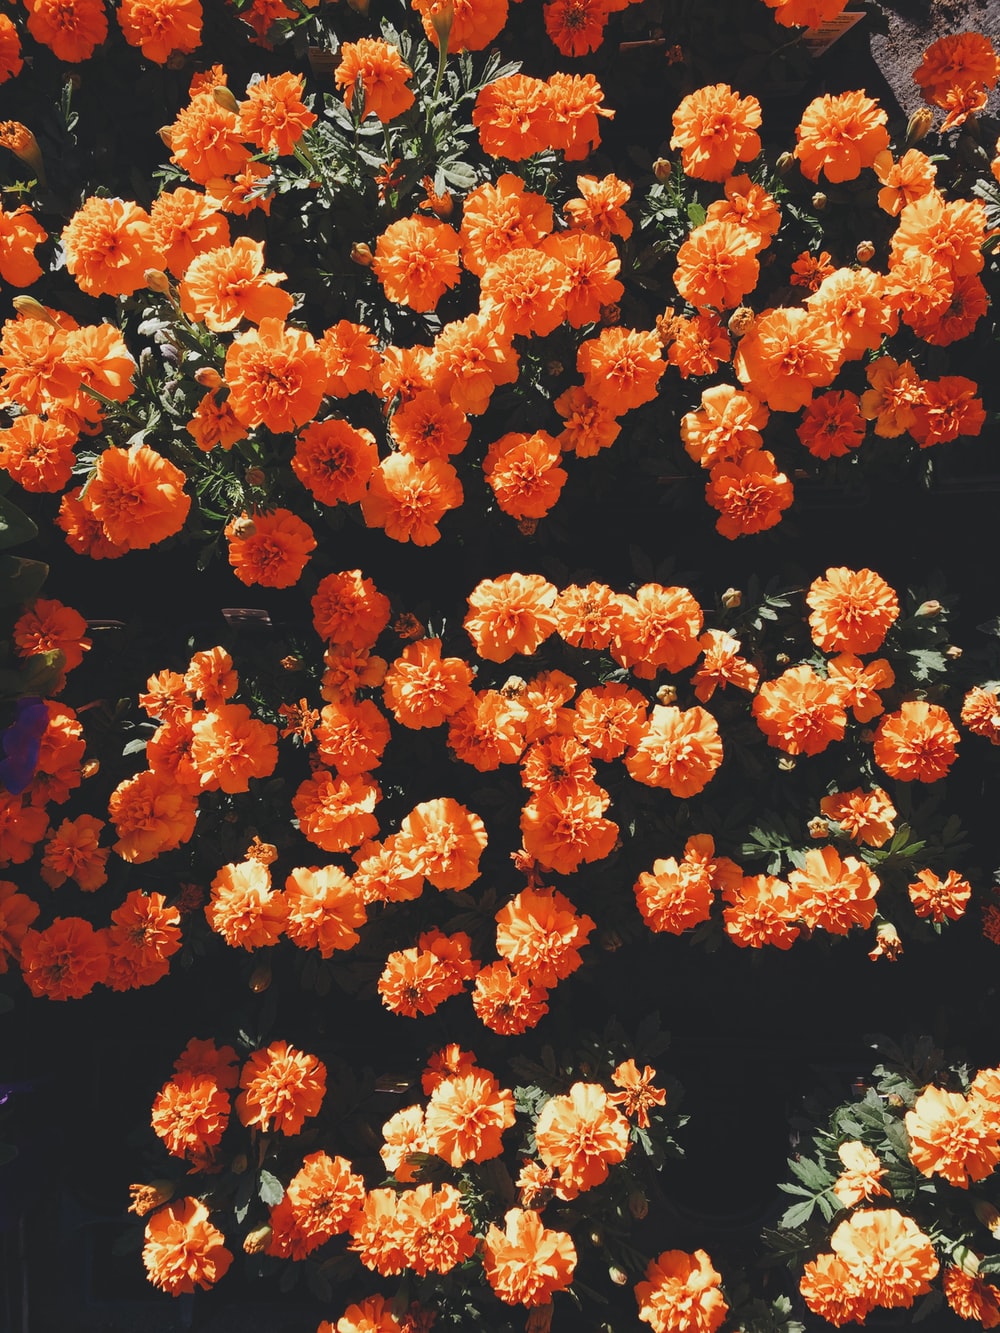 Orange Flower Pictures Image